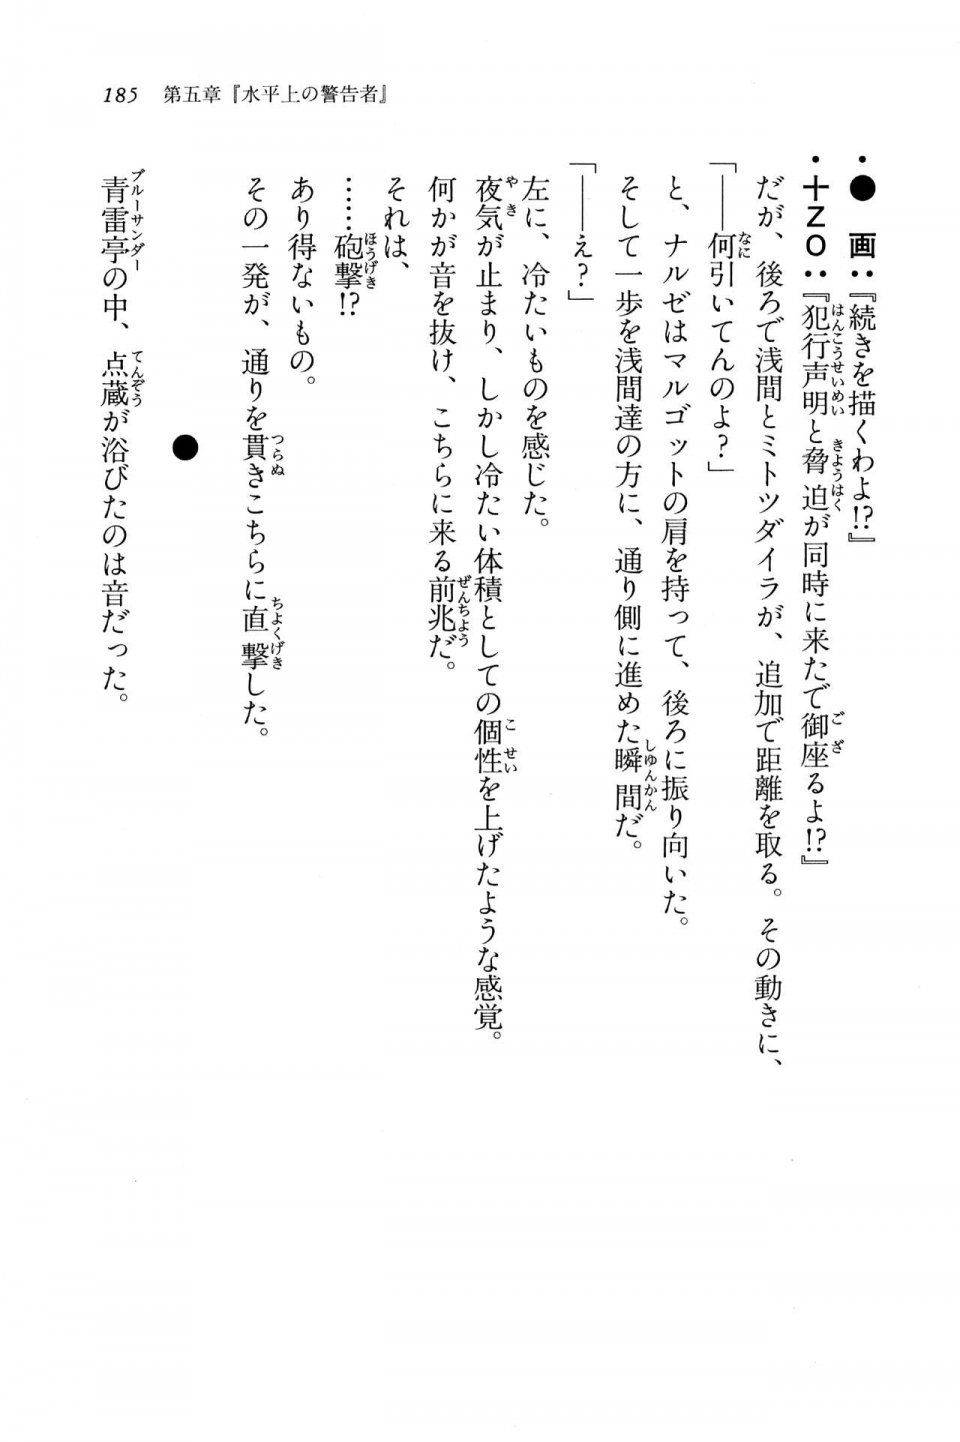 Kyoukai Senjou no Horizon BD Special Mininovel Vol 7(4A) - Photo #189